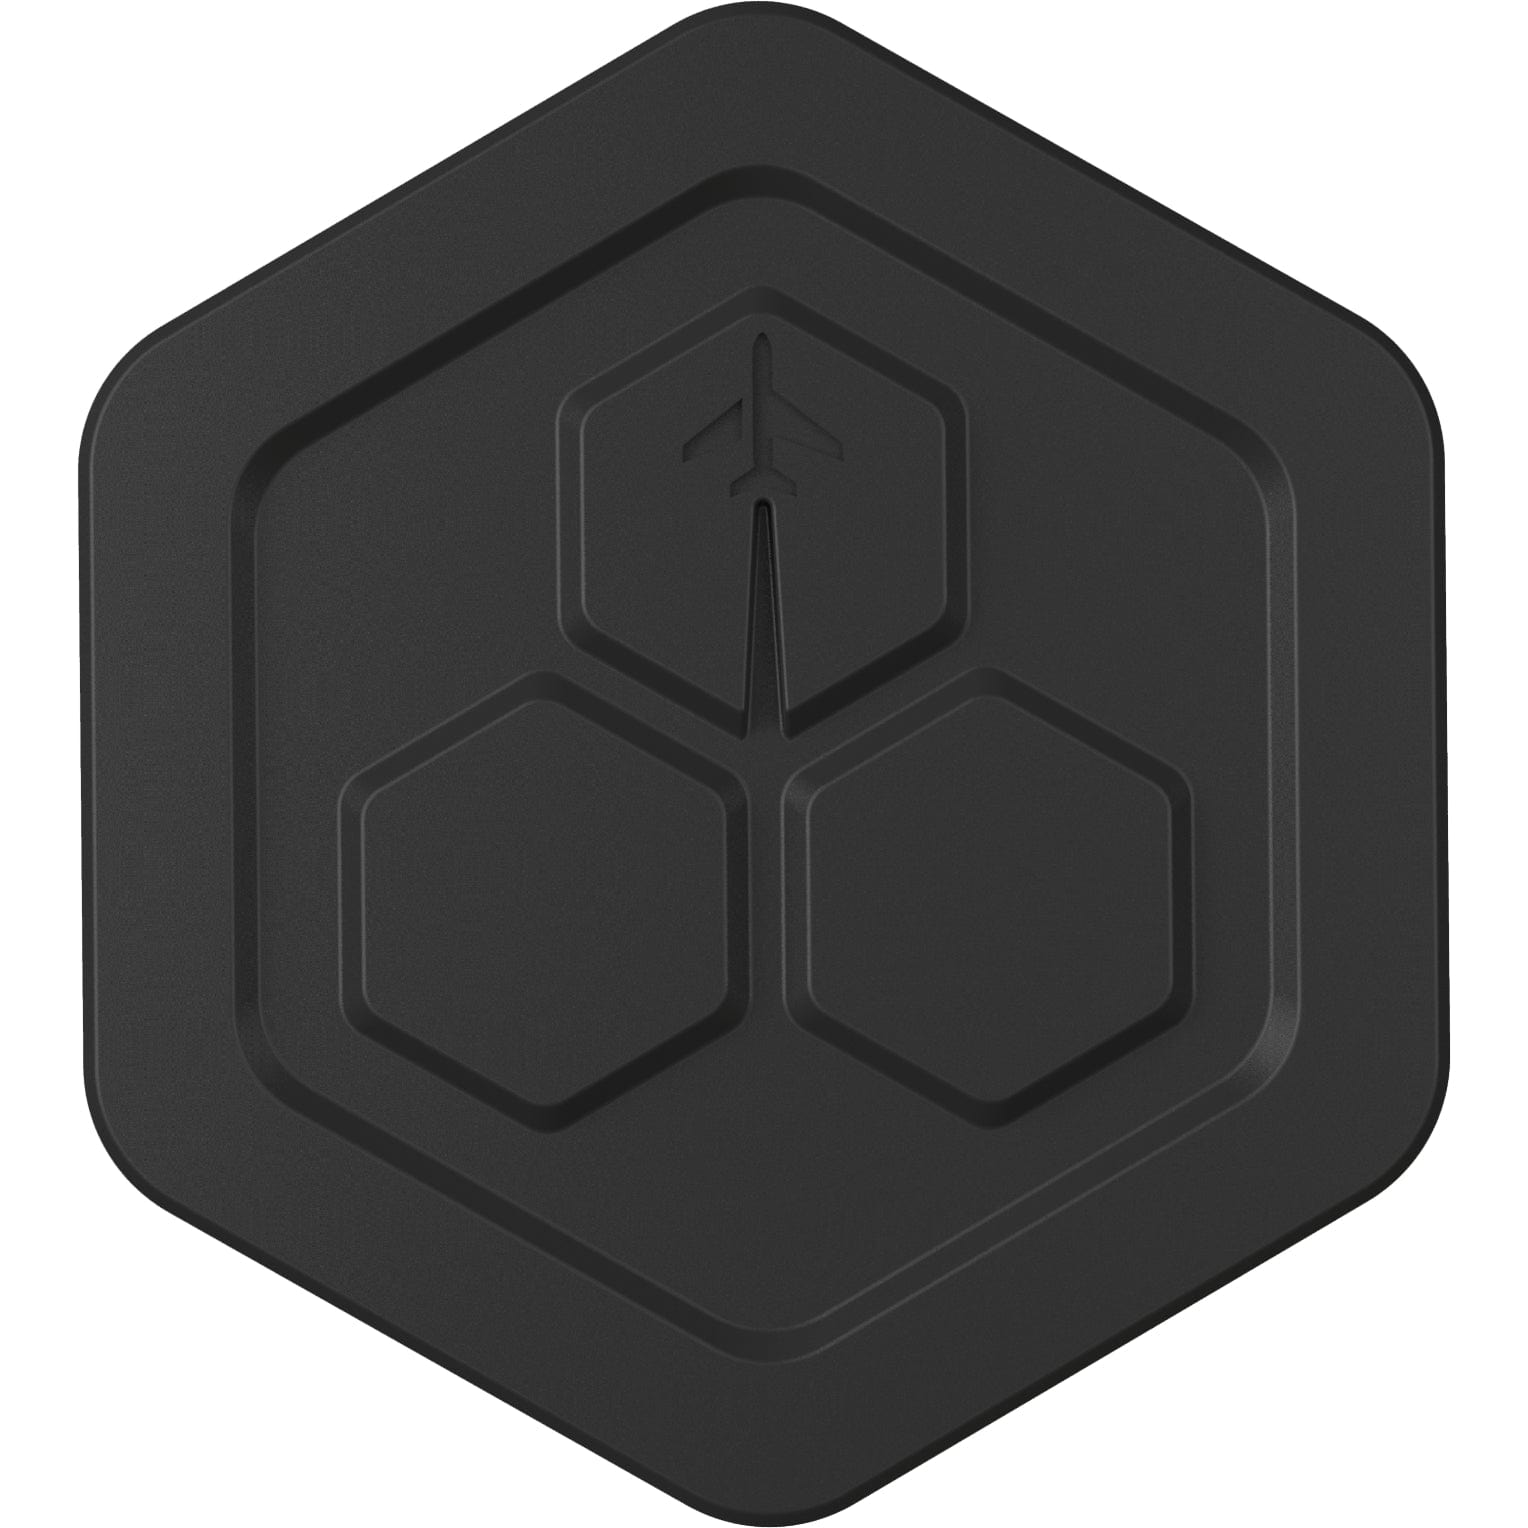 Honeycomb Xbox Hub - PilotMall.com